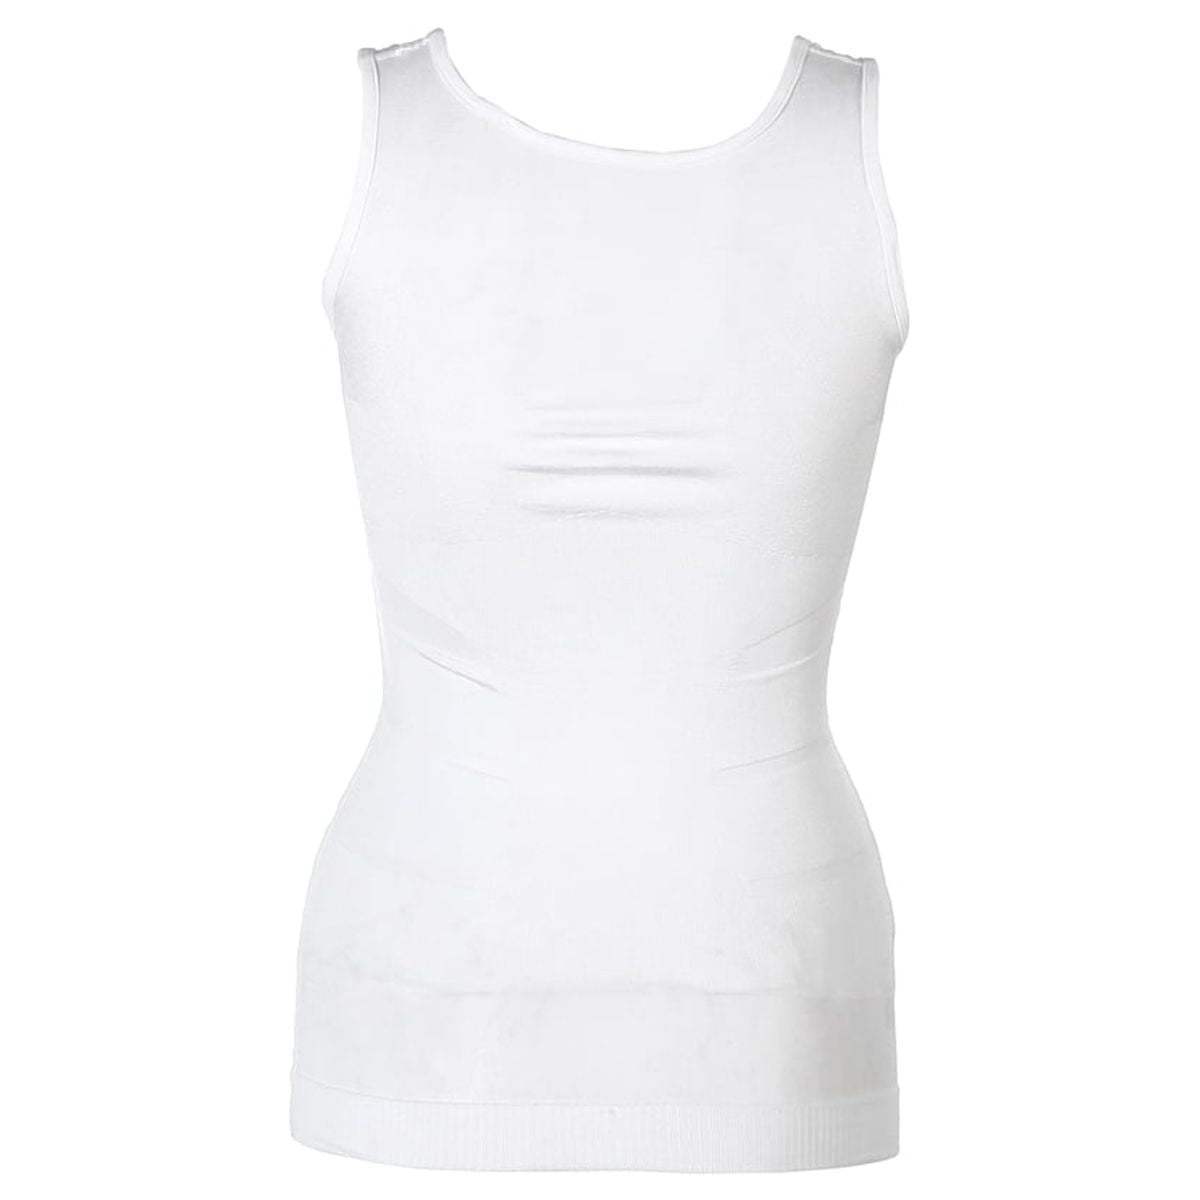 Musuos Men Firm Slim Undershirt Compression Support Vest Body Shape T ...